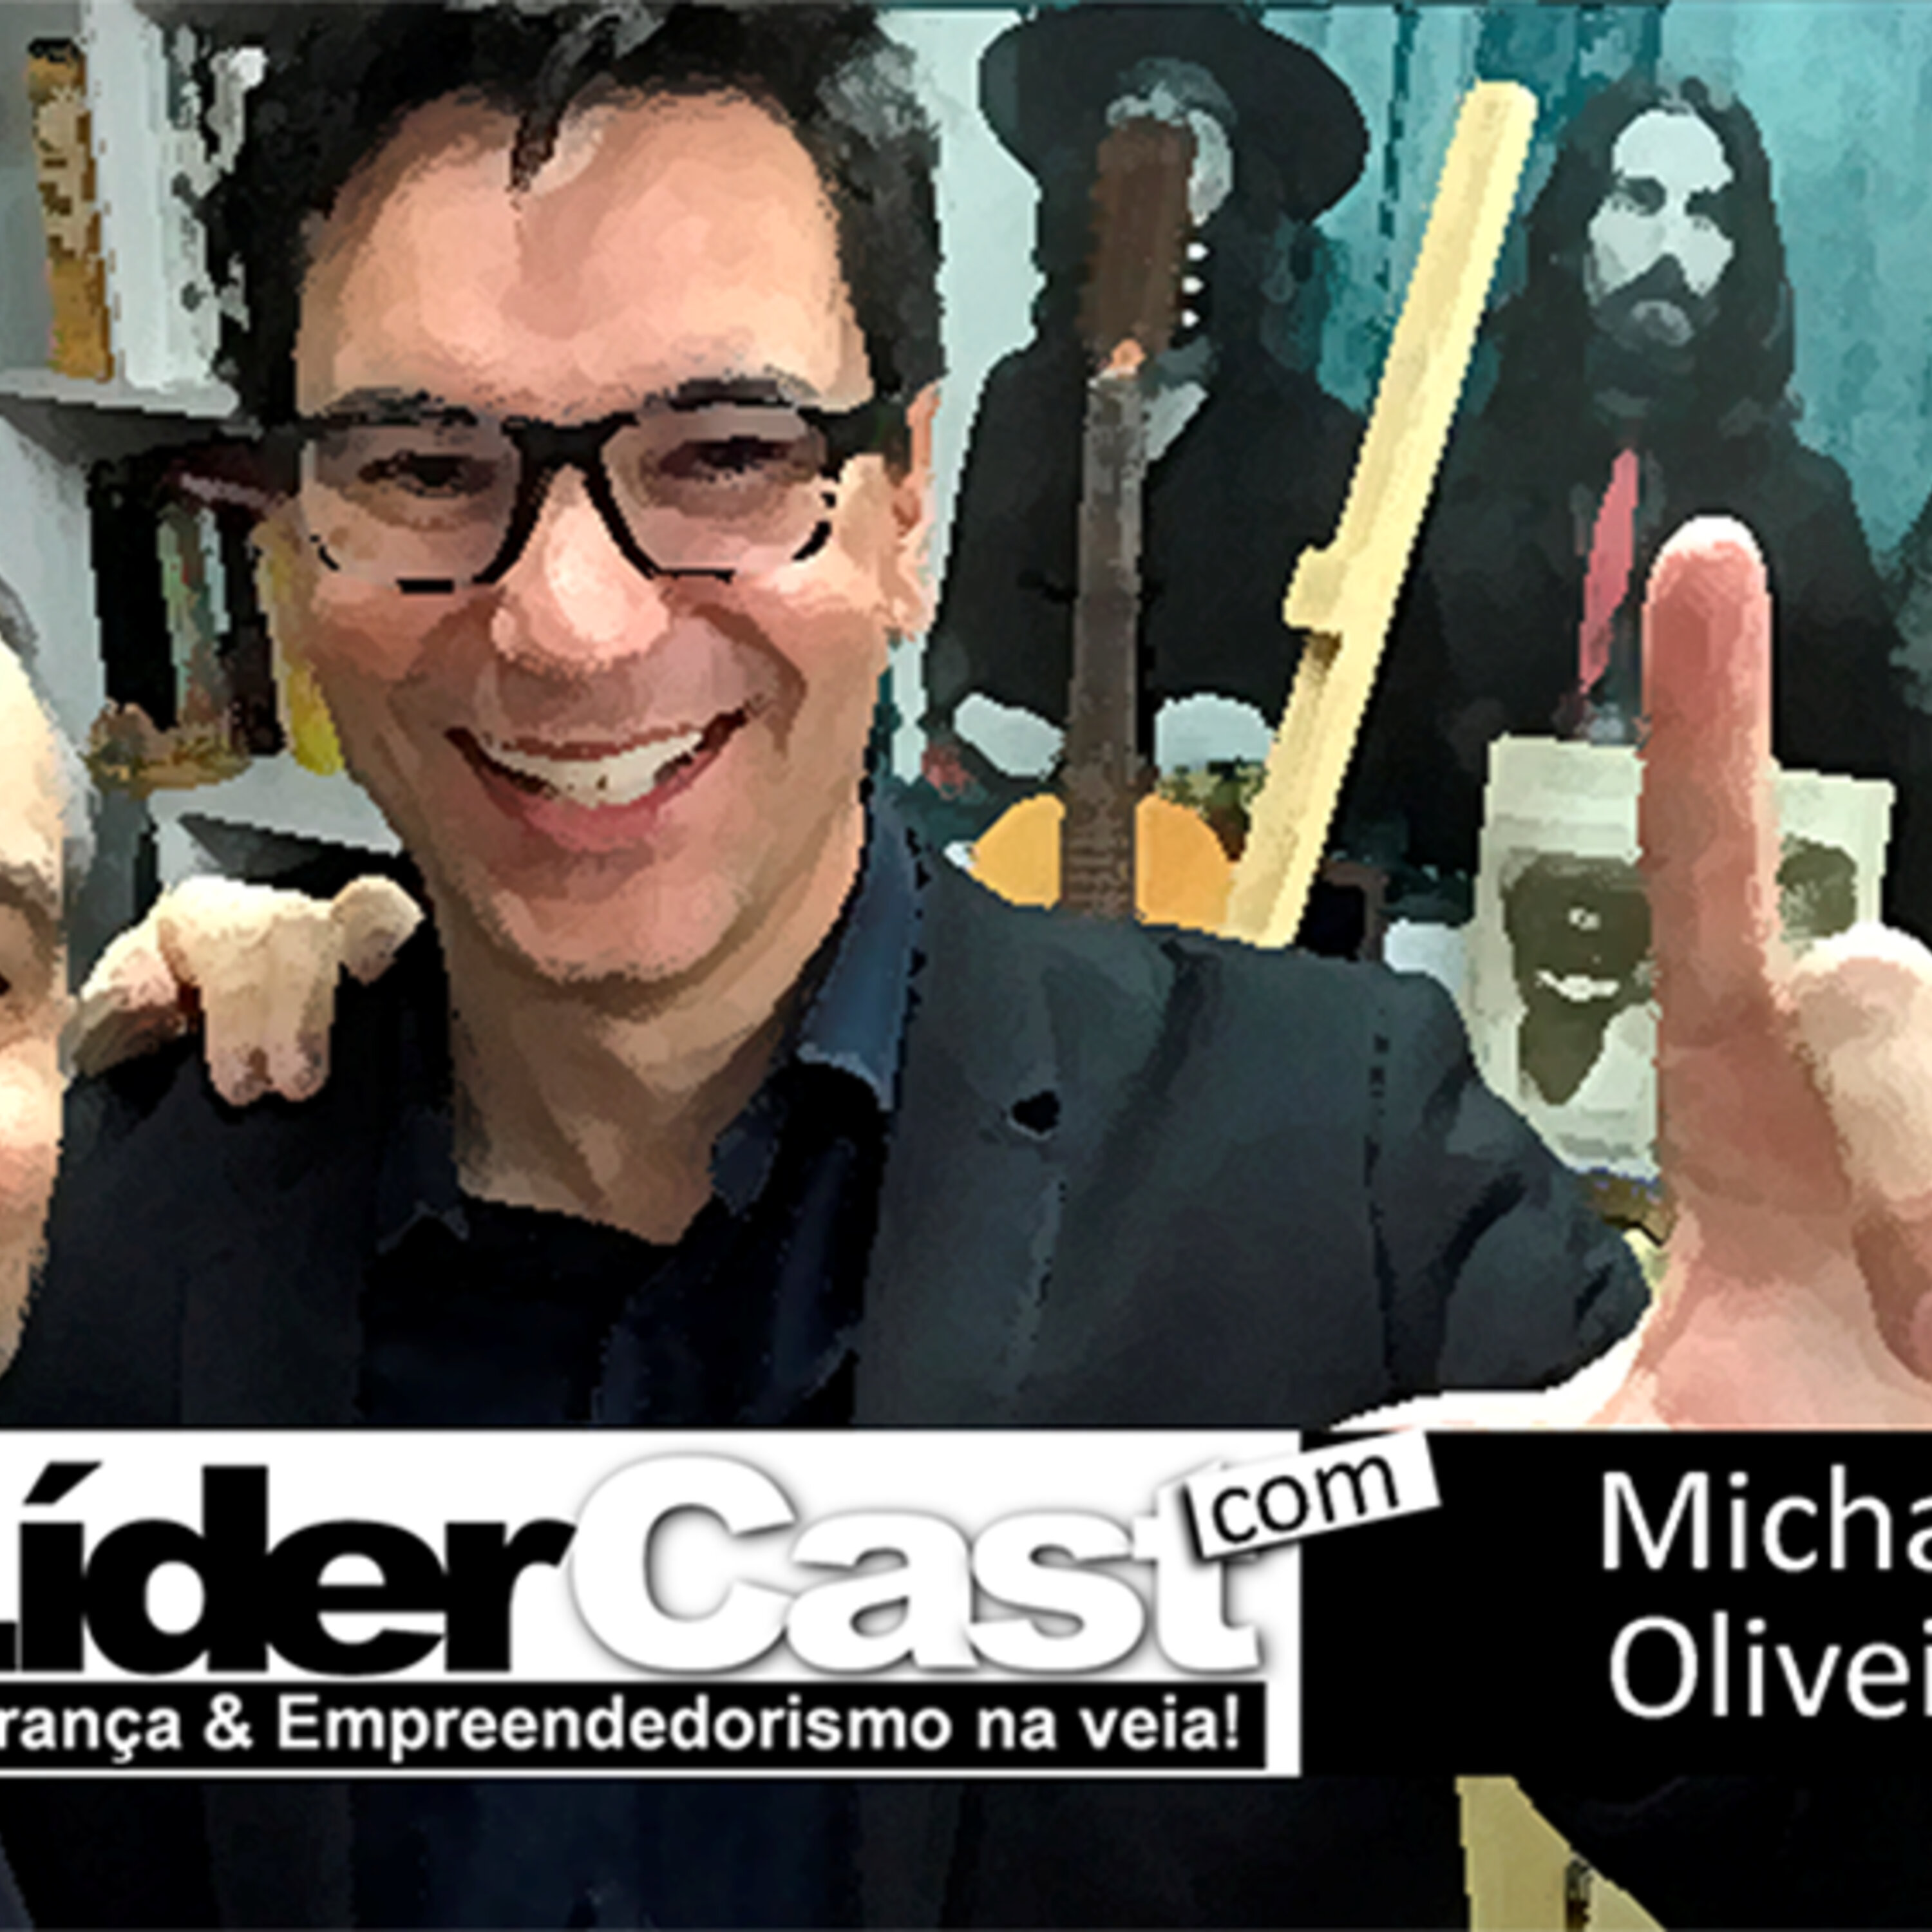 LíderCast 97 – Michael Oliveira